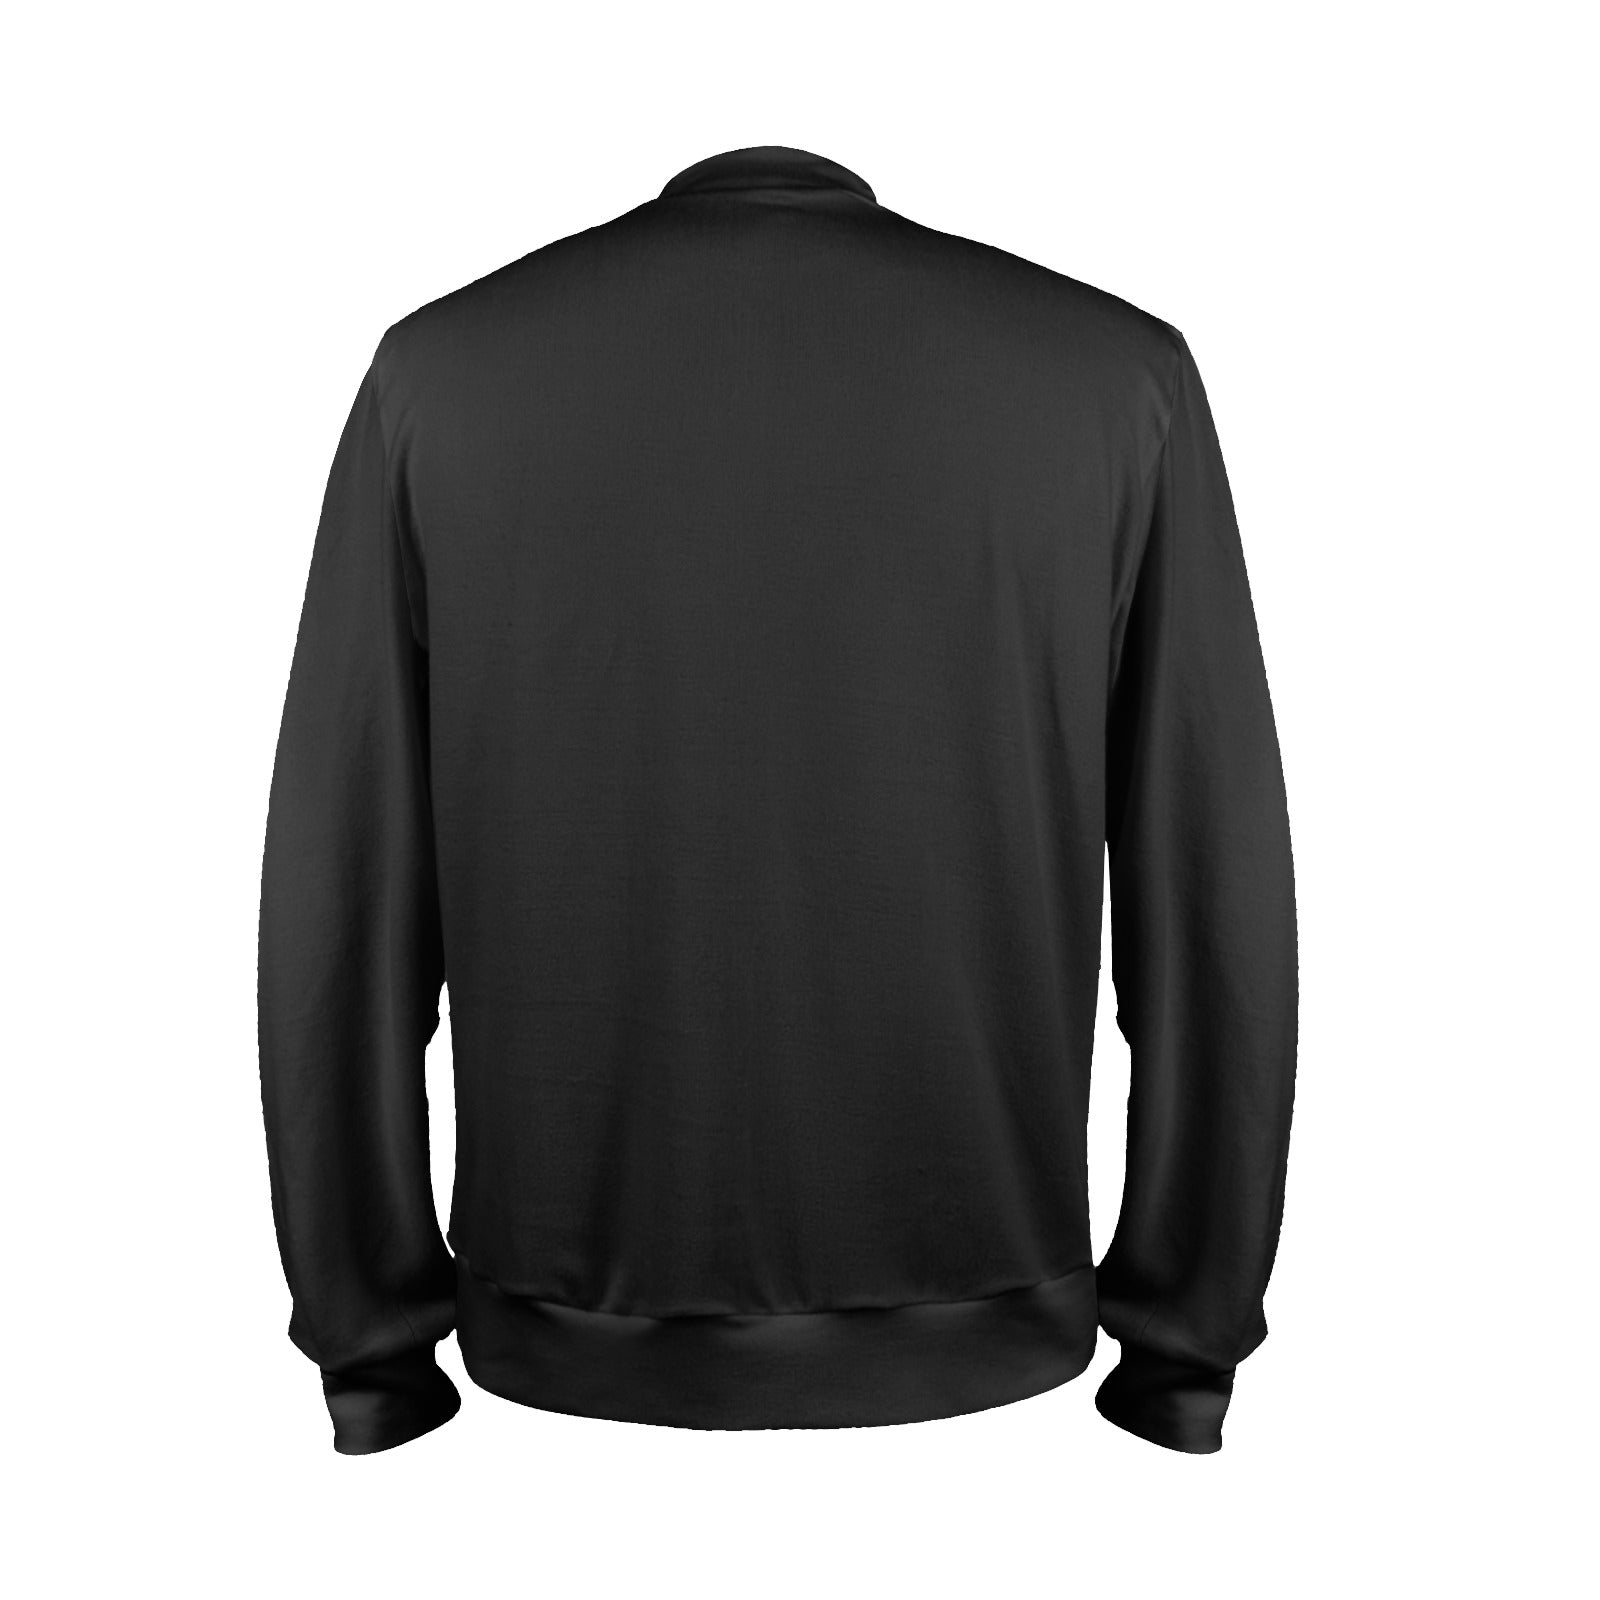 Jet Black Collection Men's All Over Print Mock Neck Sweater (Model H43) - ELITA IMPERIA INC.